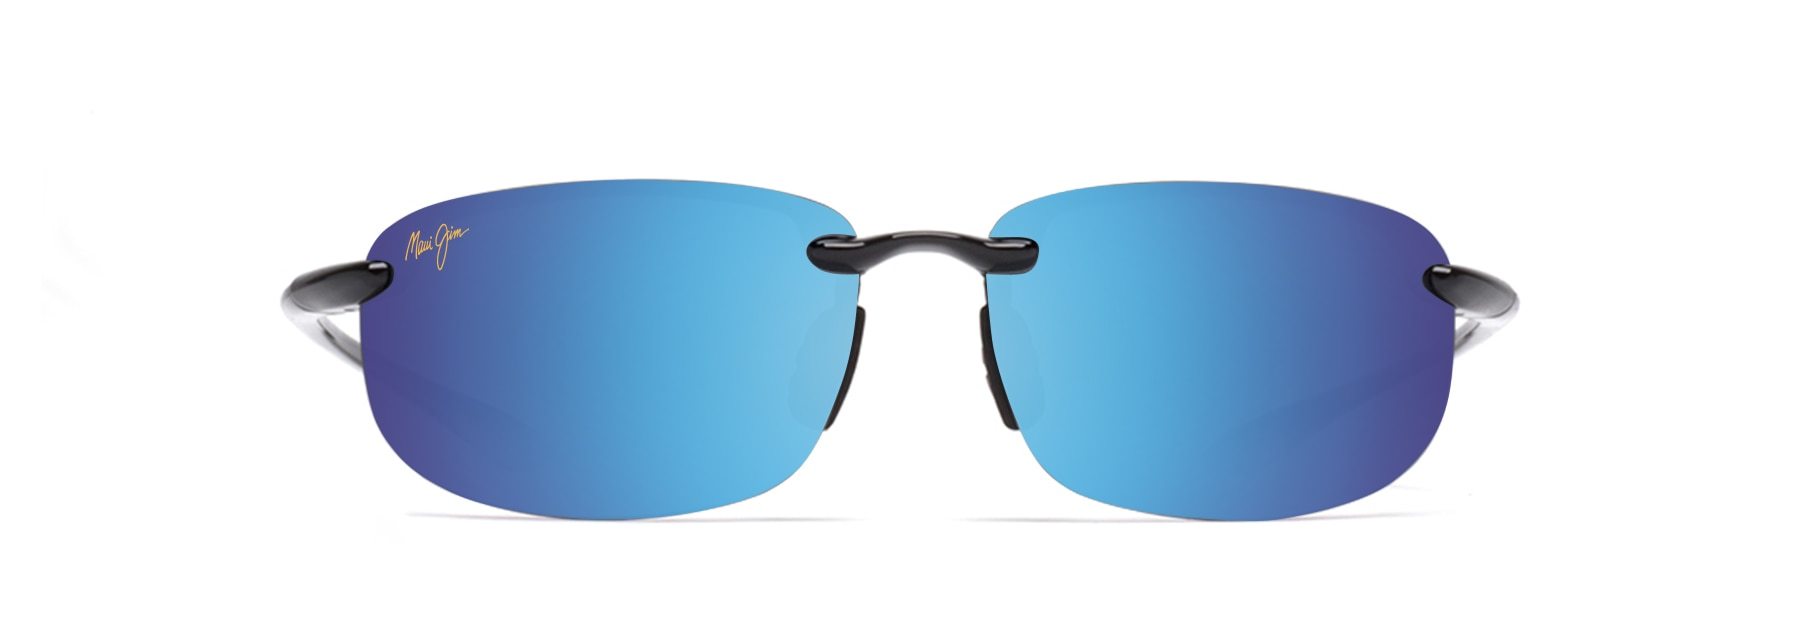 MyMaui Ho'Okipa MM407-012 Sunglasses